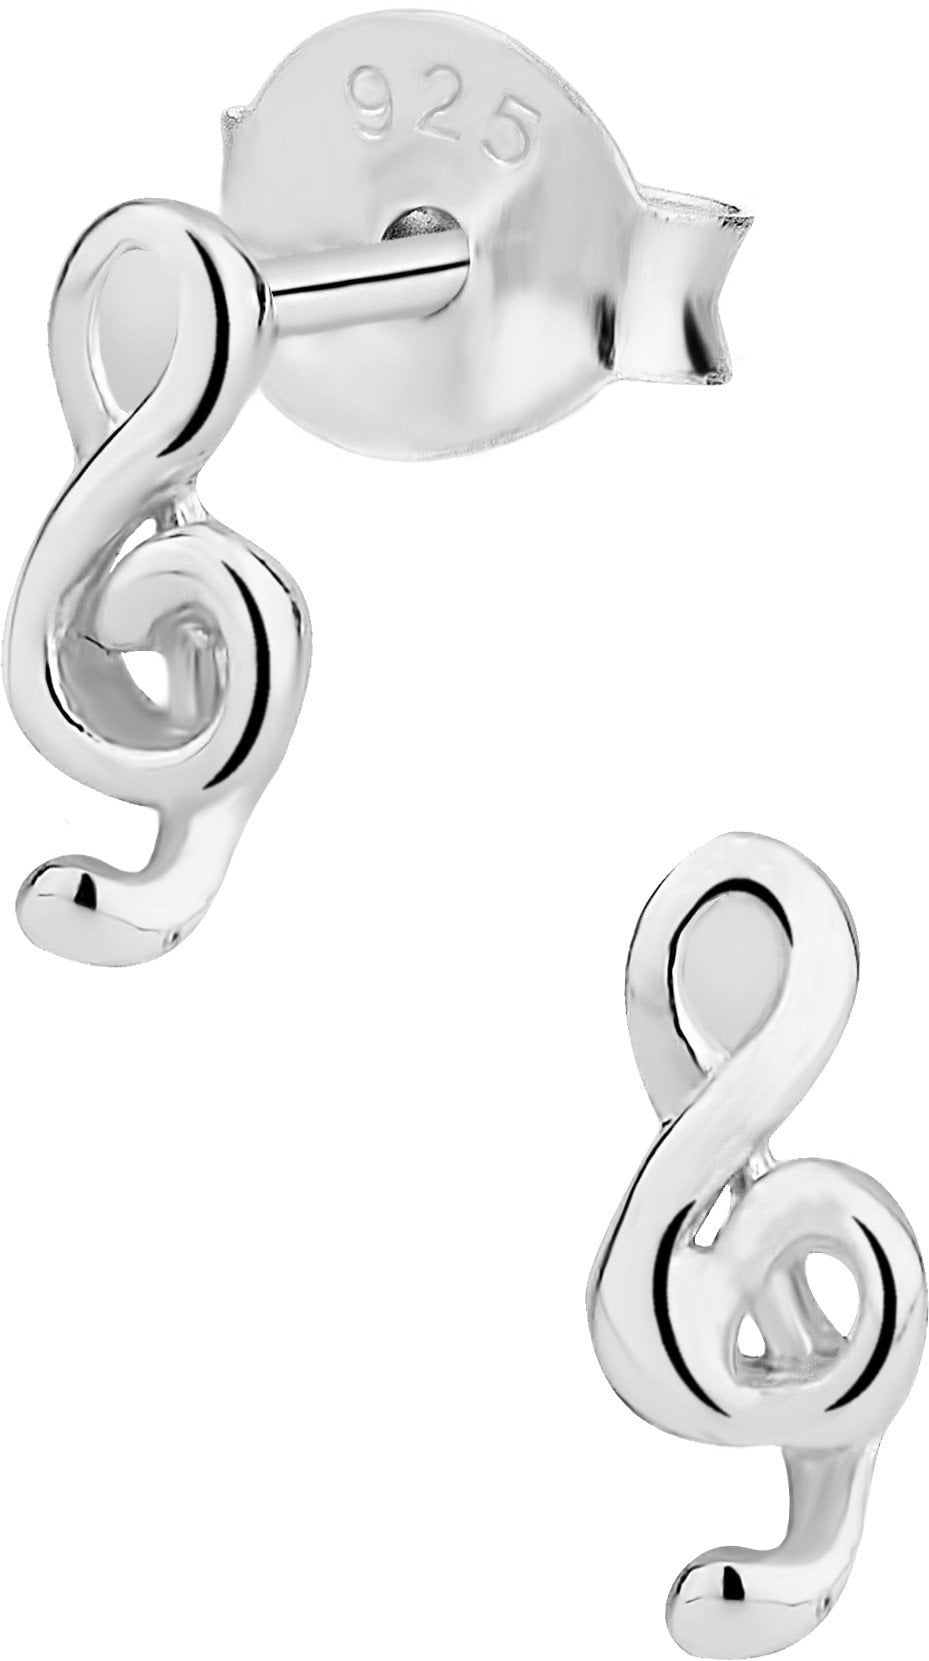 Treble Clef Musique Symbole .925 Solid Sterling Silver Stud Post Earrings 12 mm 